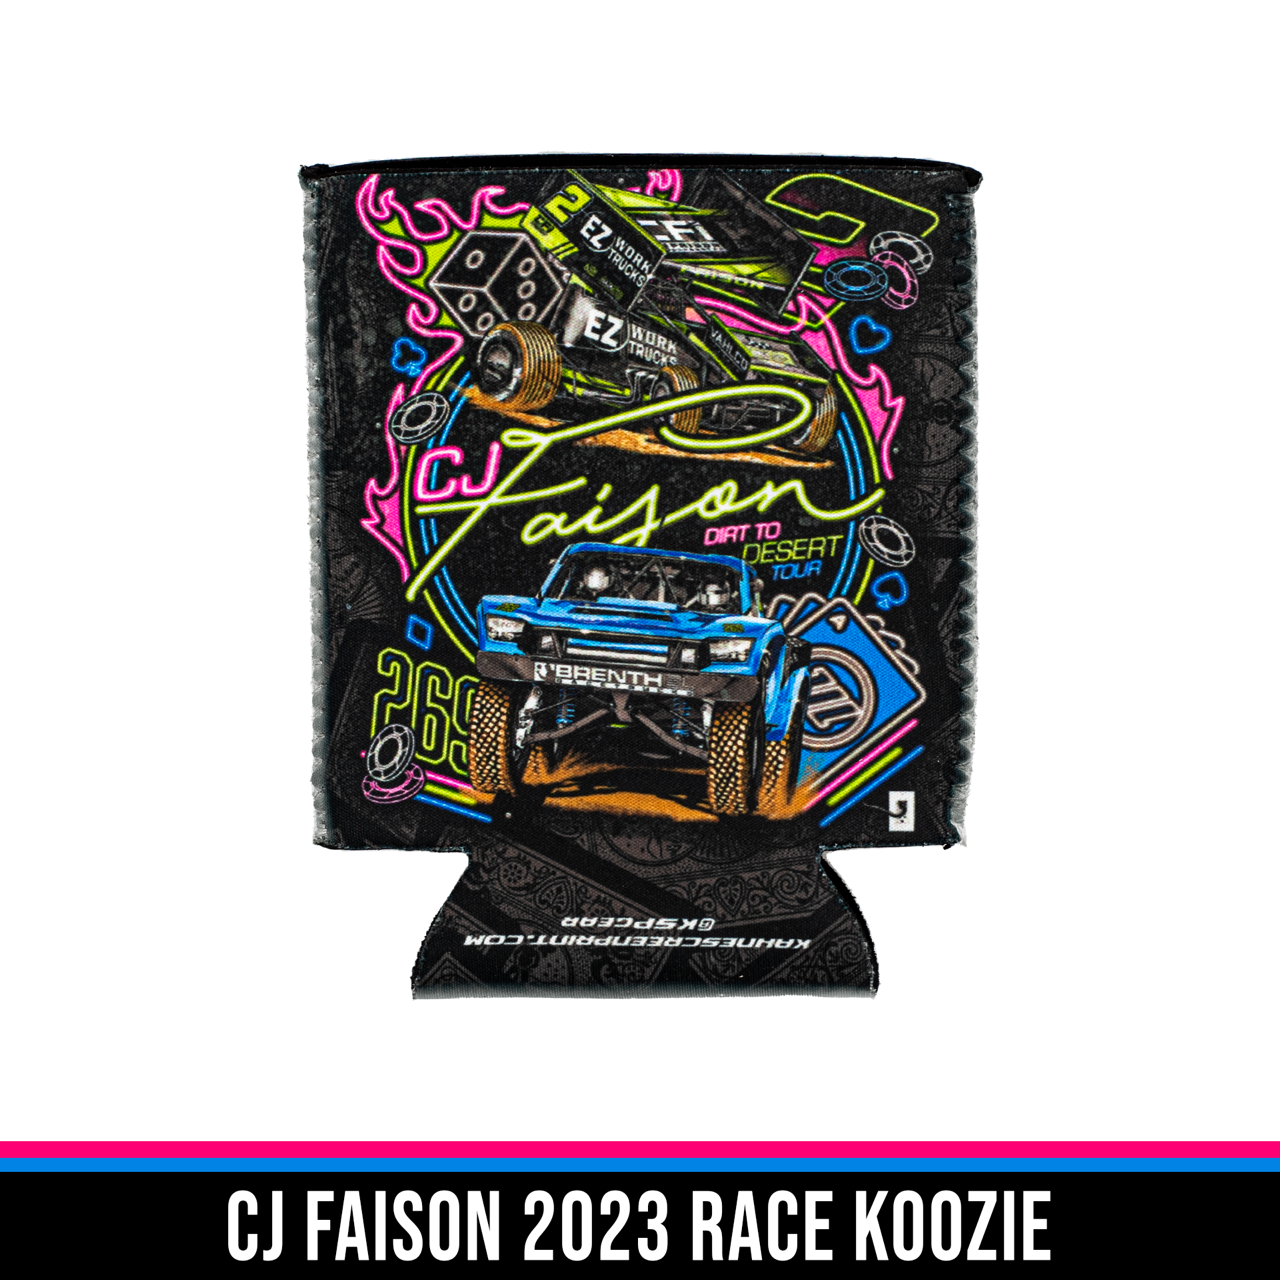 CJ Faison 2023 Race Koozie